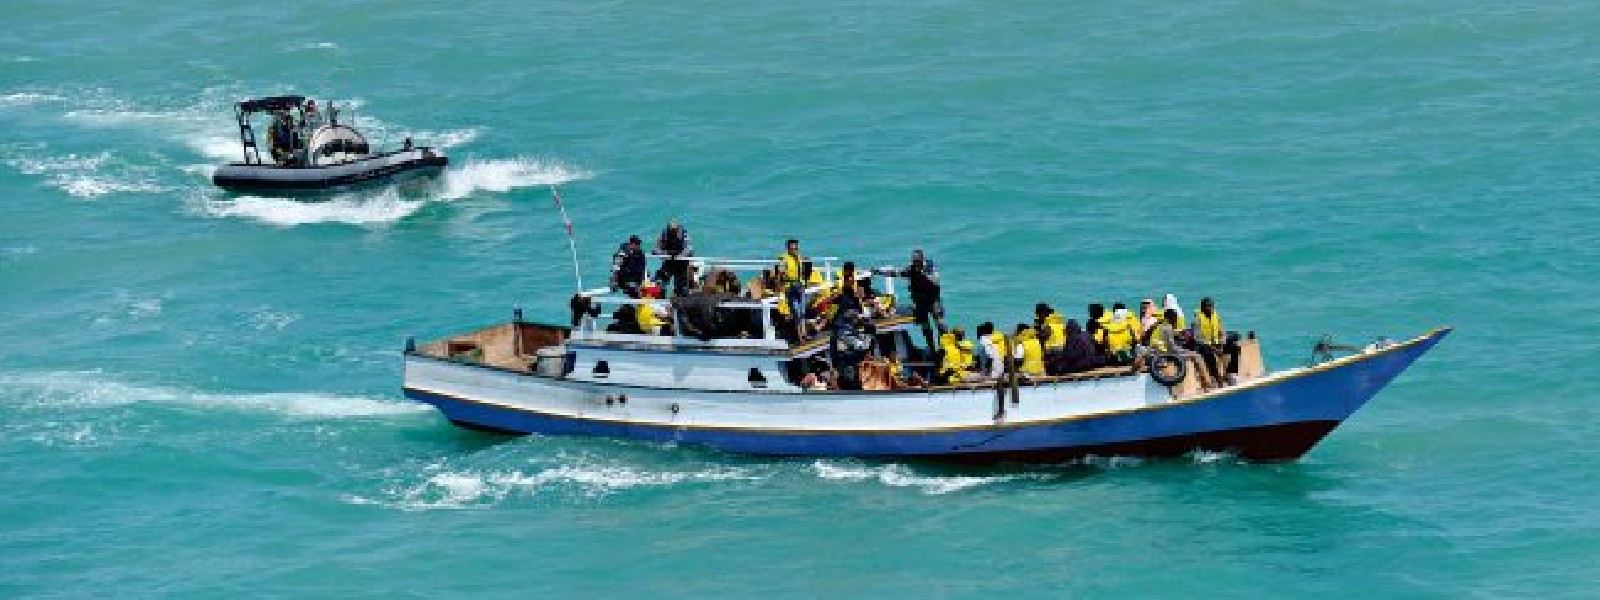 Australia intercepts another asylum seeker boat